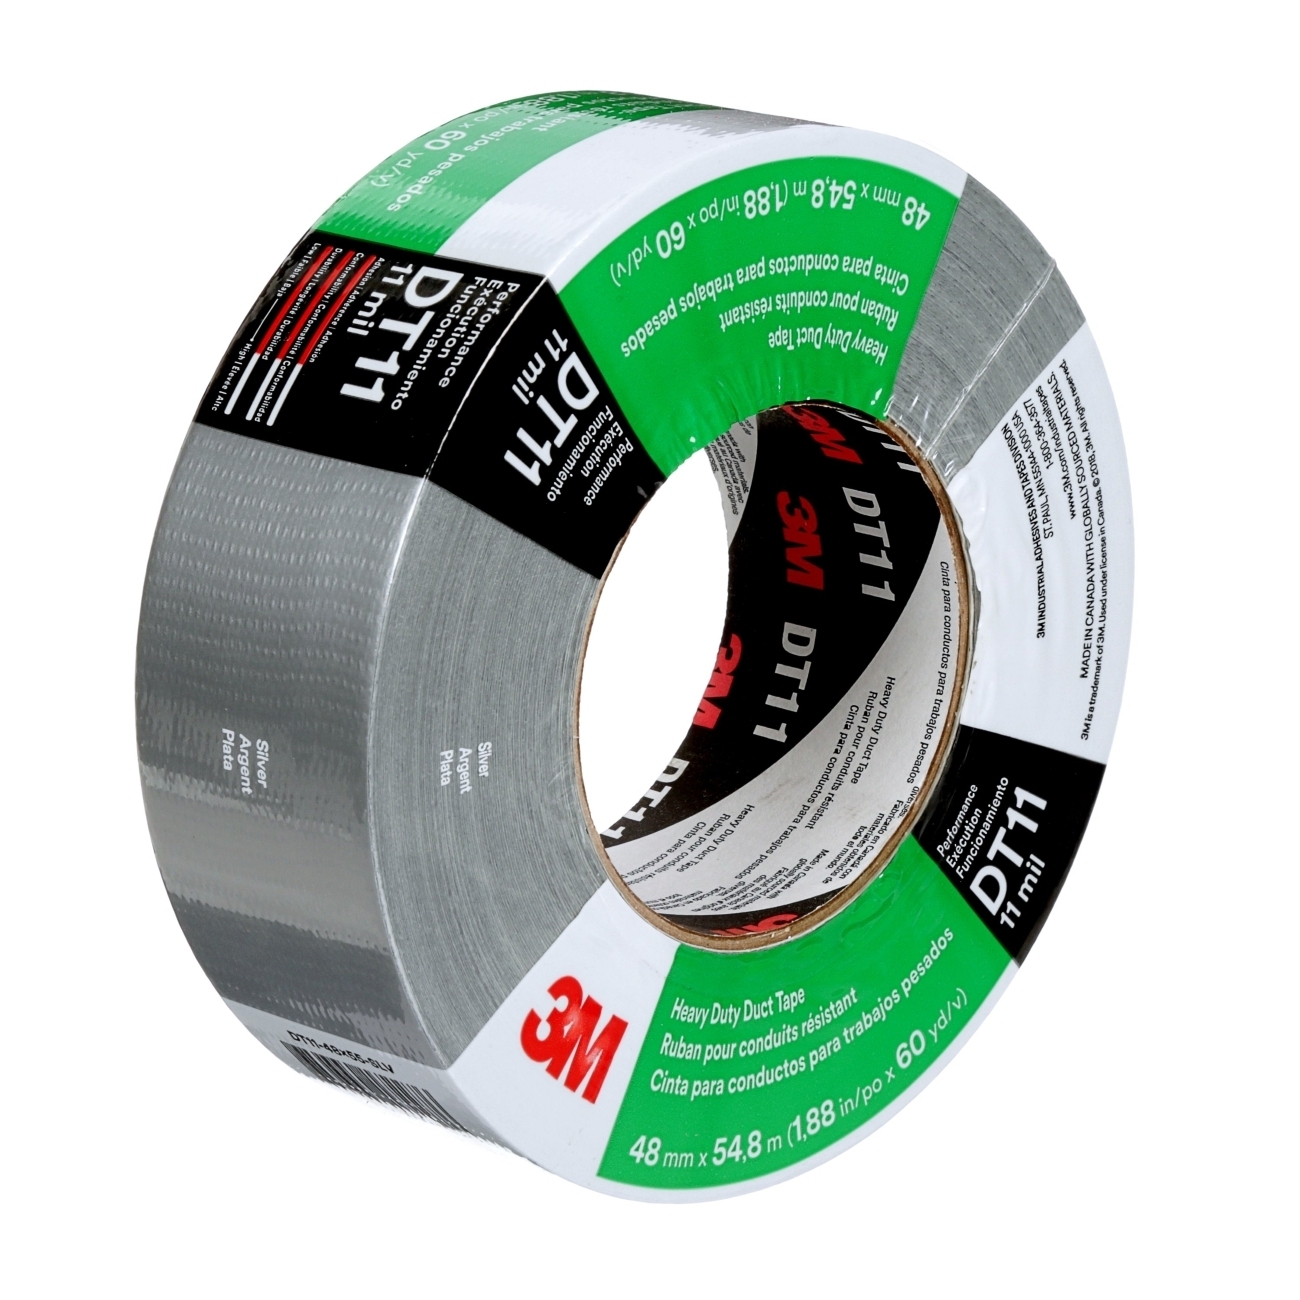 3M heavy duty fabric tape DT11, silver, 48 mm x 55 m, 0.28 mm